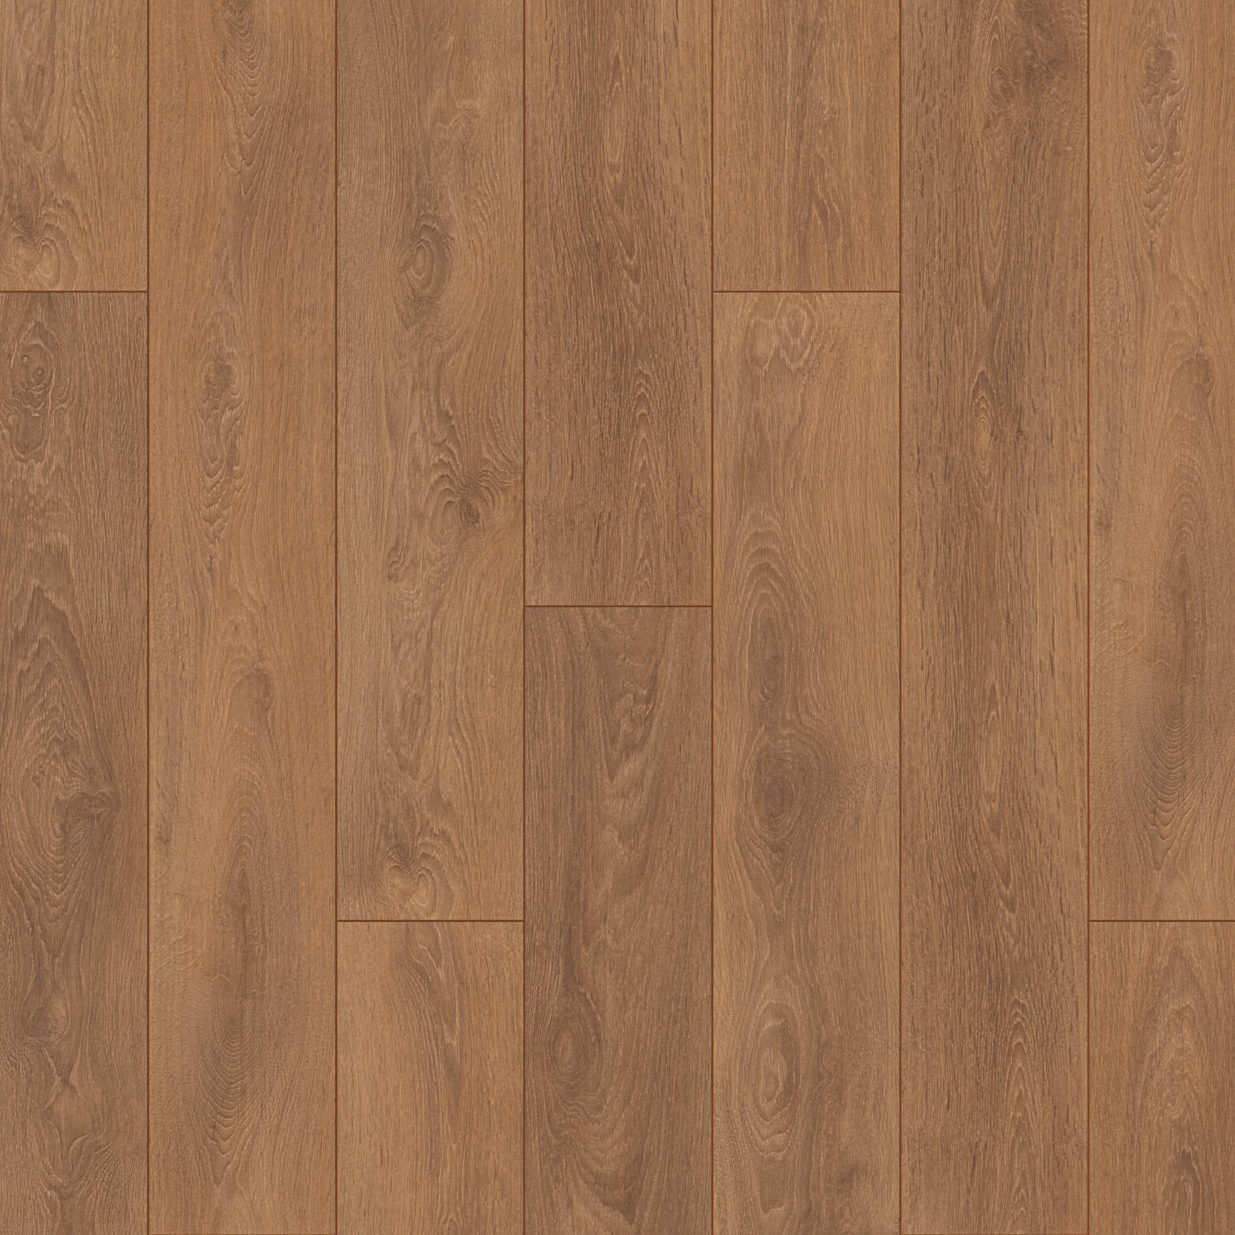 Image of Rosedale Medium Oak 8mm Moisture Resistant Laminate Flooring - 2.22m2